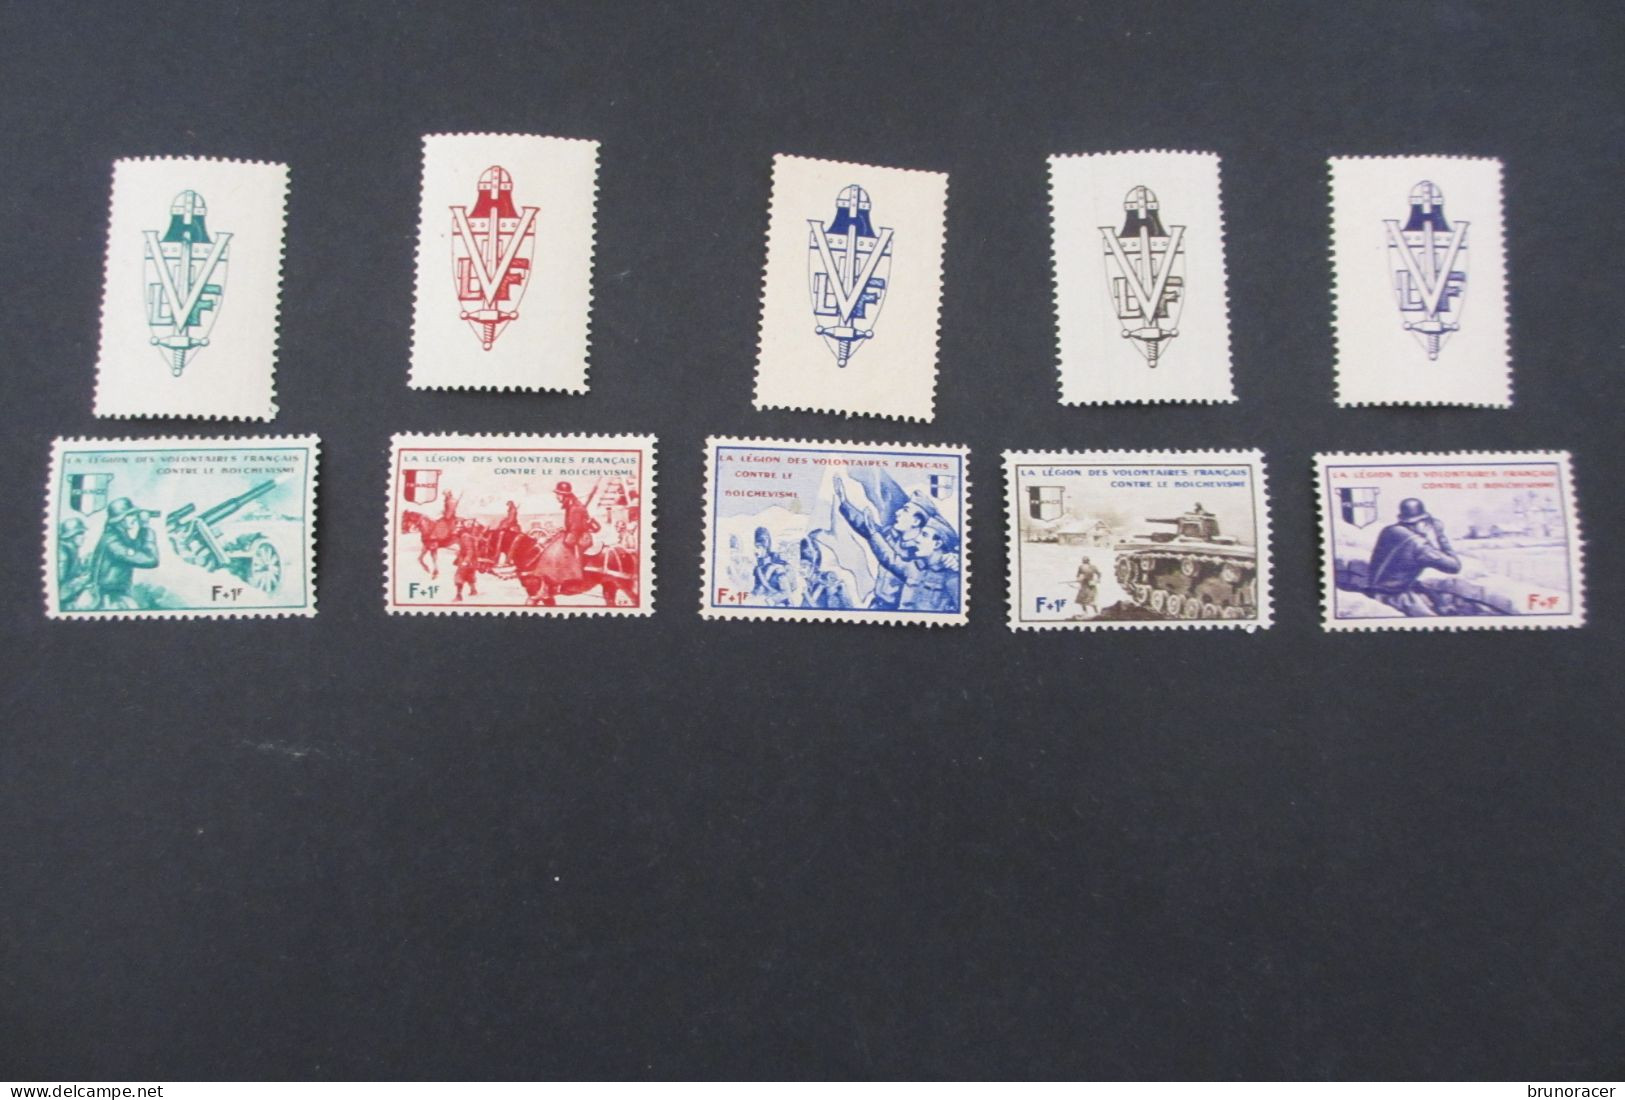 FRANCE LVF SERIE BORODINO  NEUF** COTE 25 EUROS VOIR SCANS - War Stamps